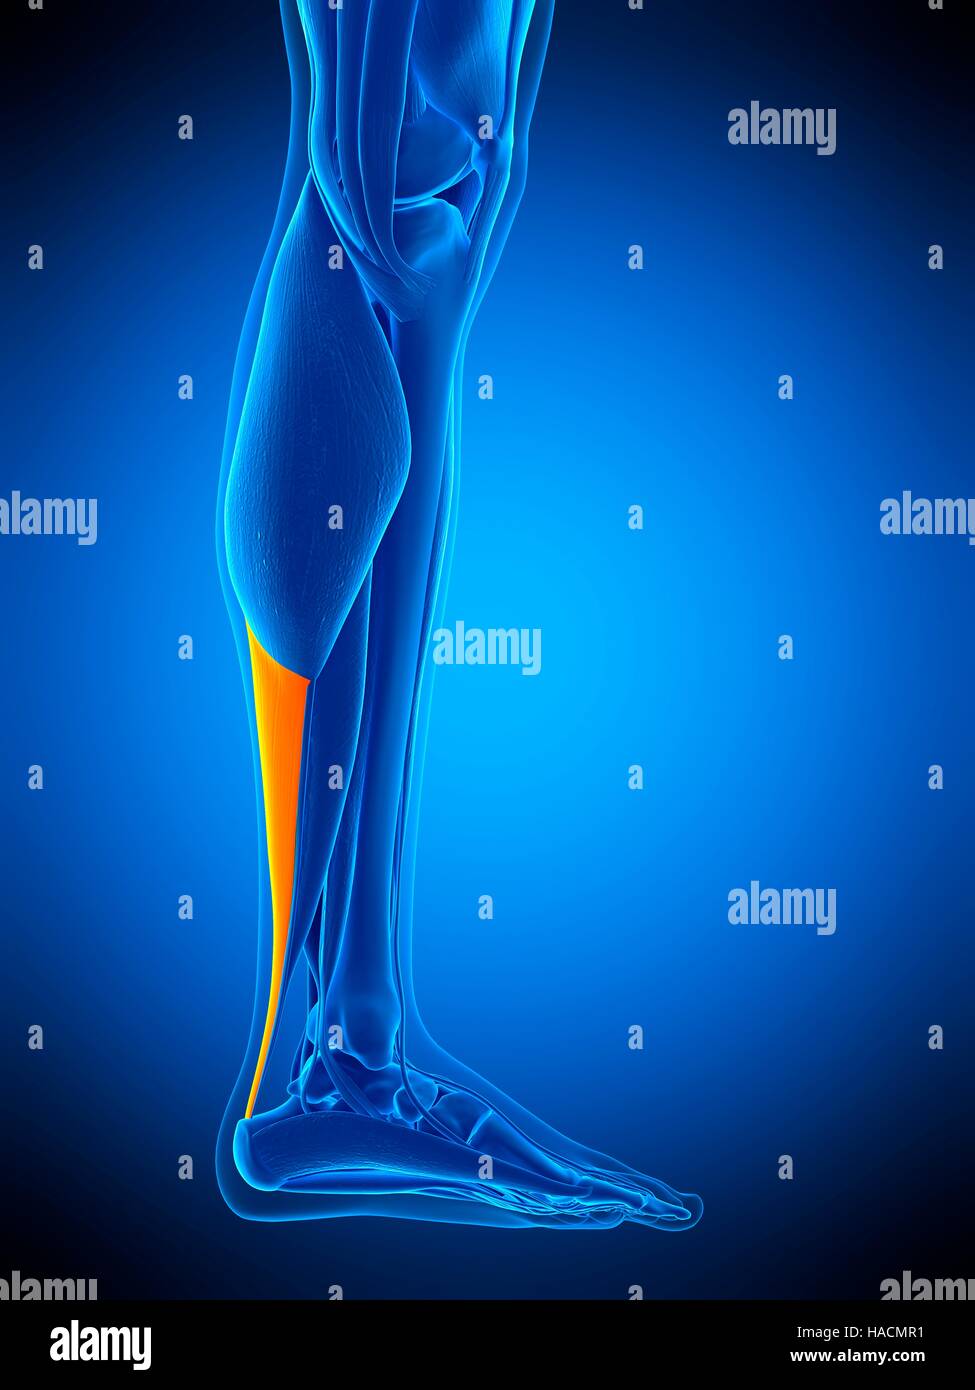 Illustration of the achilles tendon. Stock Photo